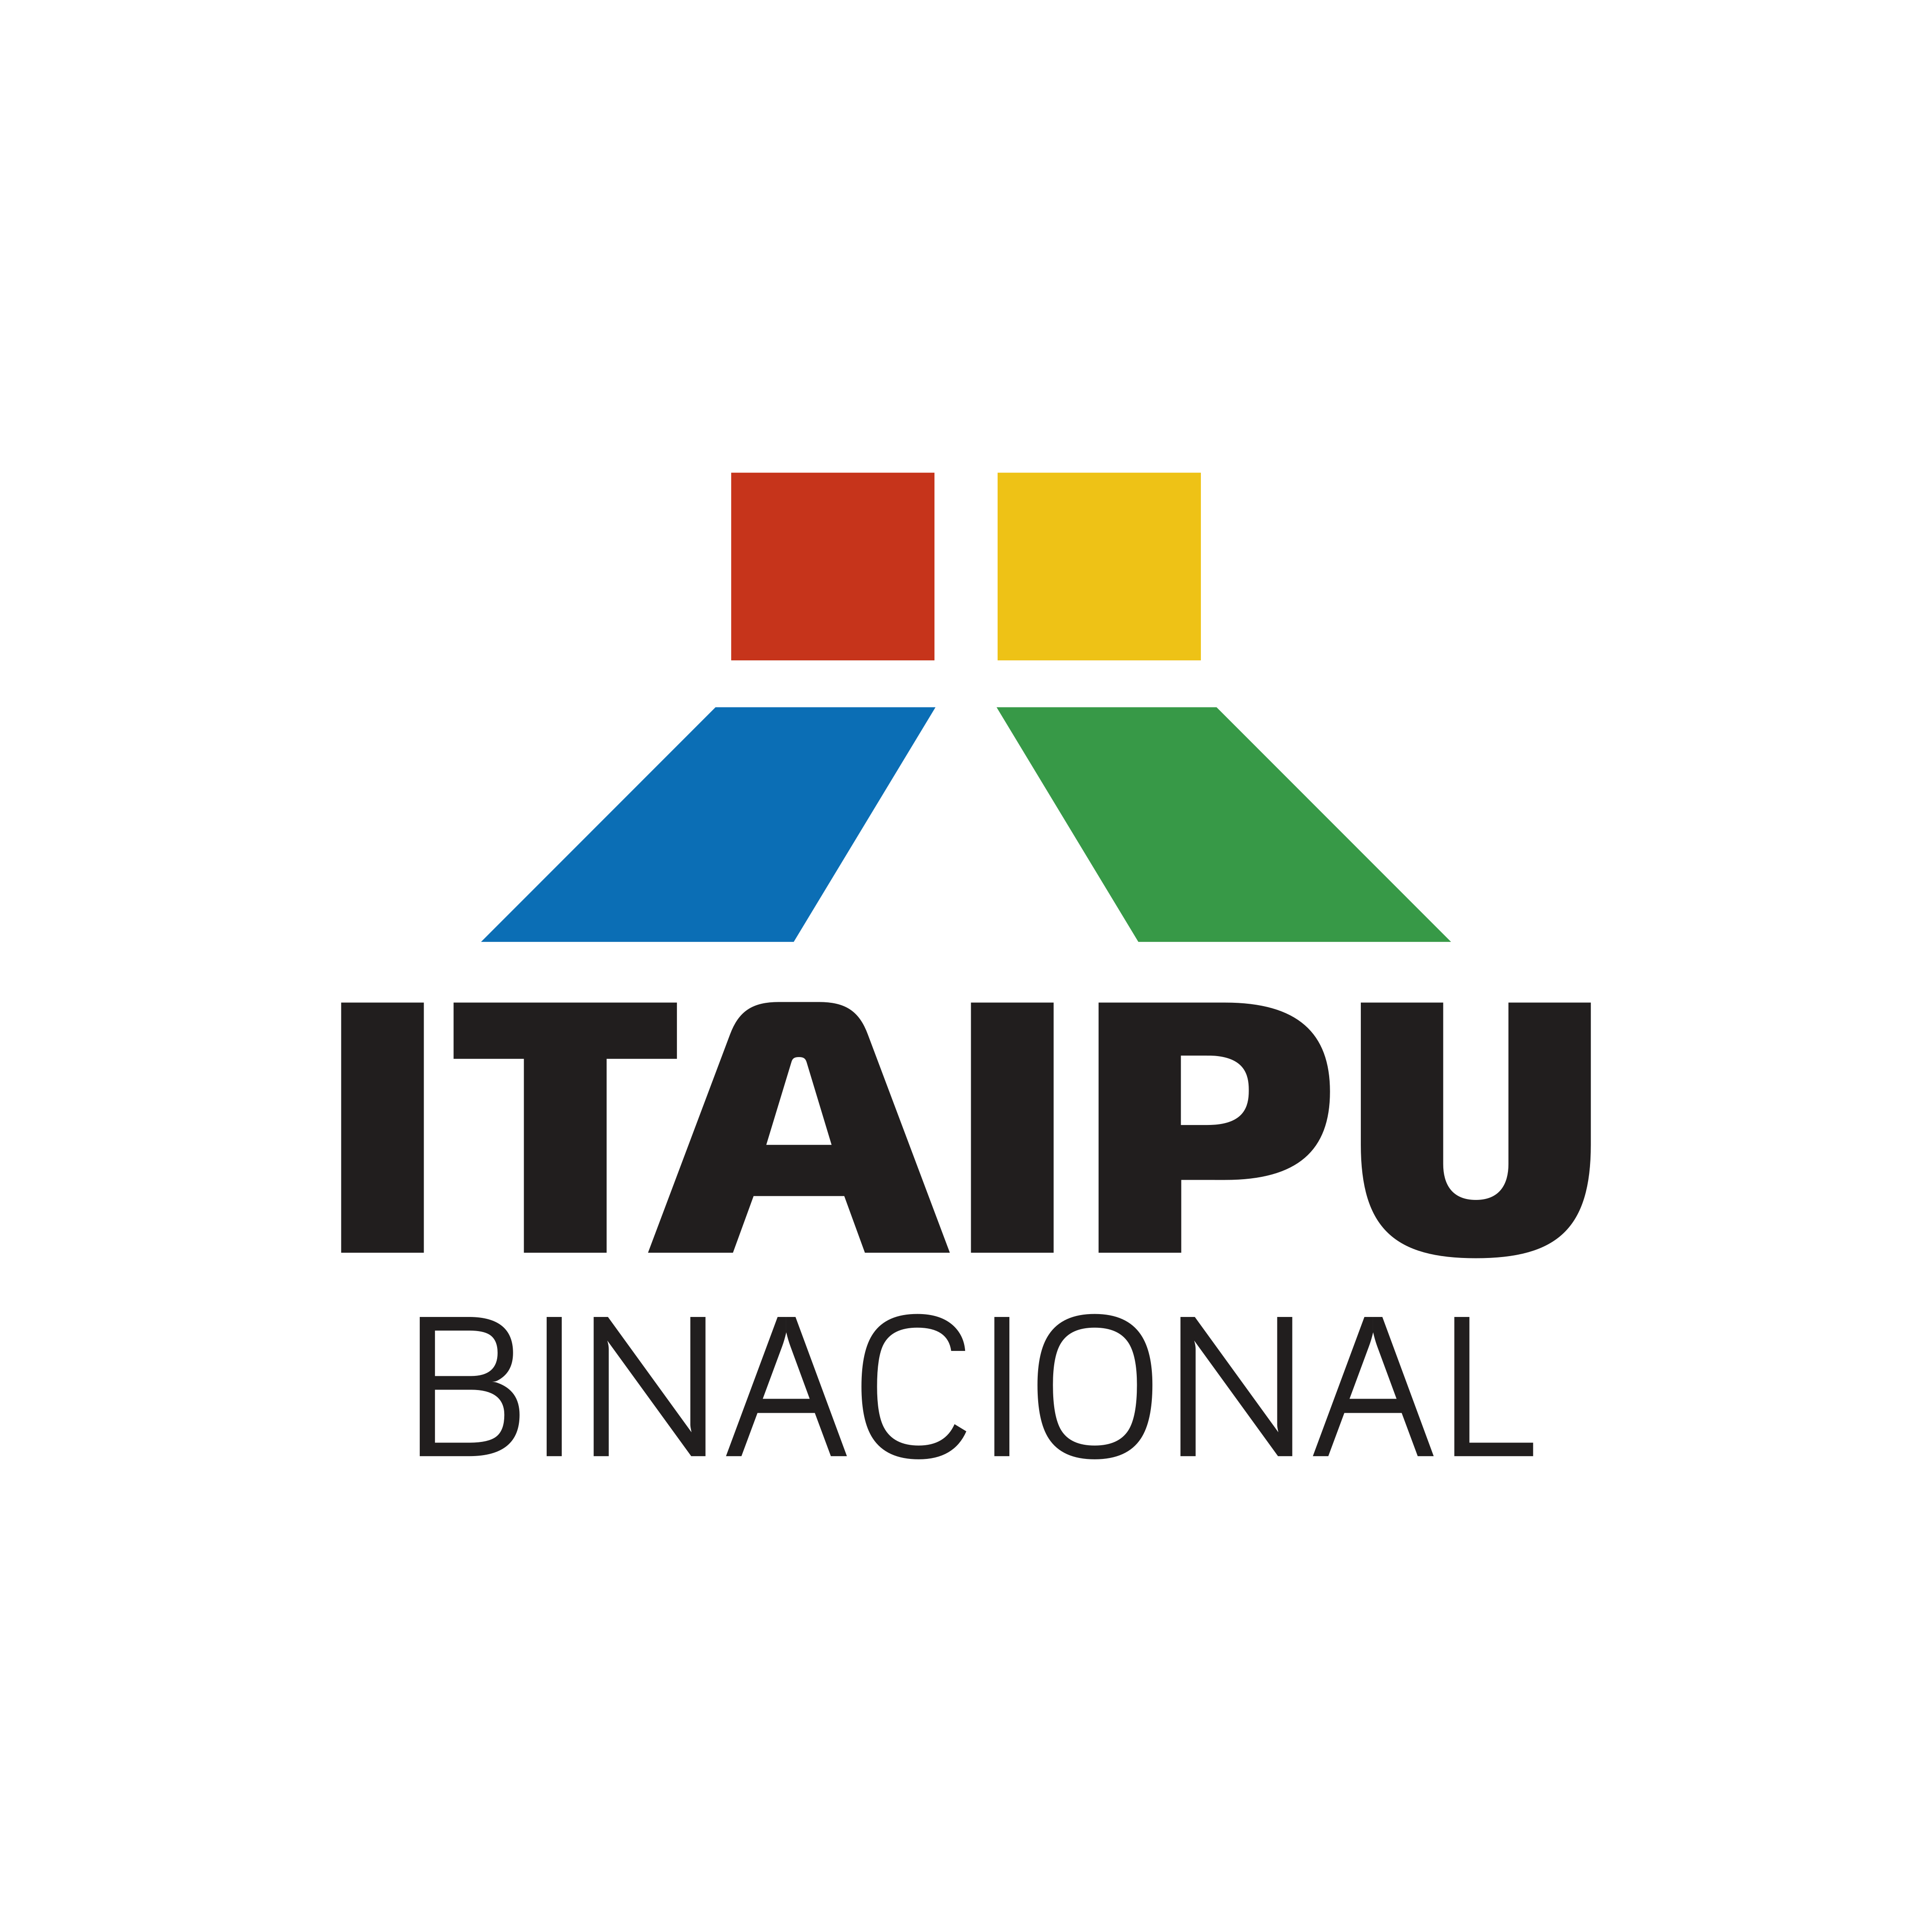 itaipu logo 0 - Itaipu Binacional Logo